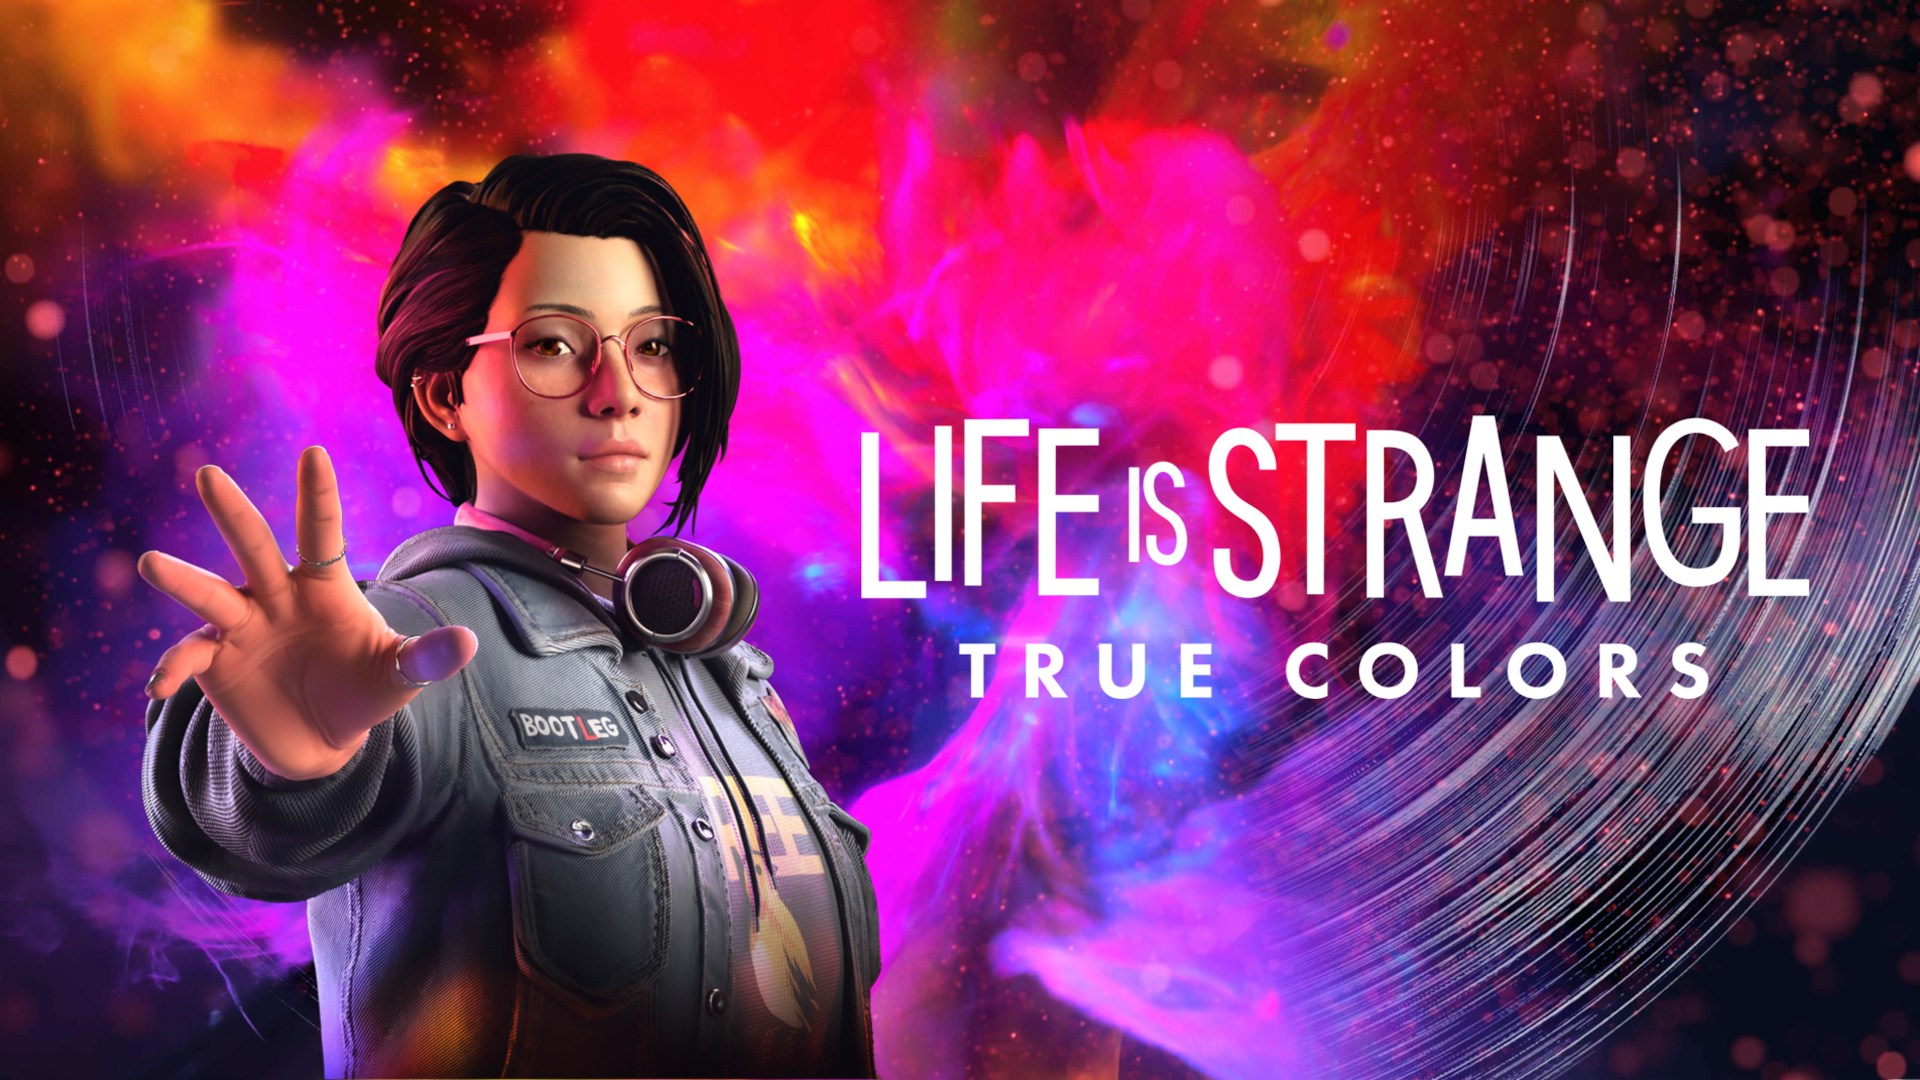 Life is Strange: True Colors: free desktop wallpaper and background image